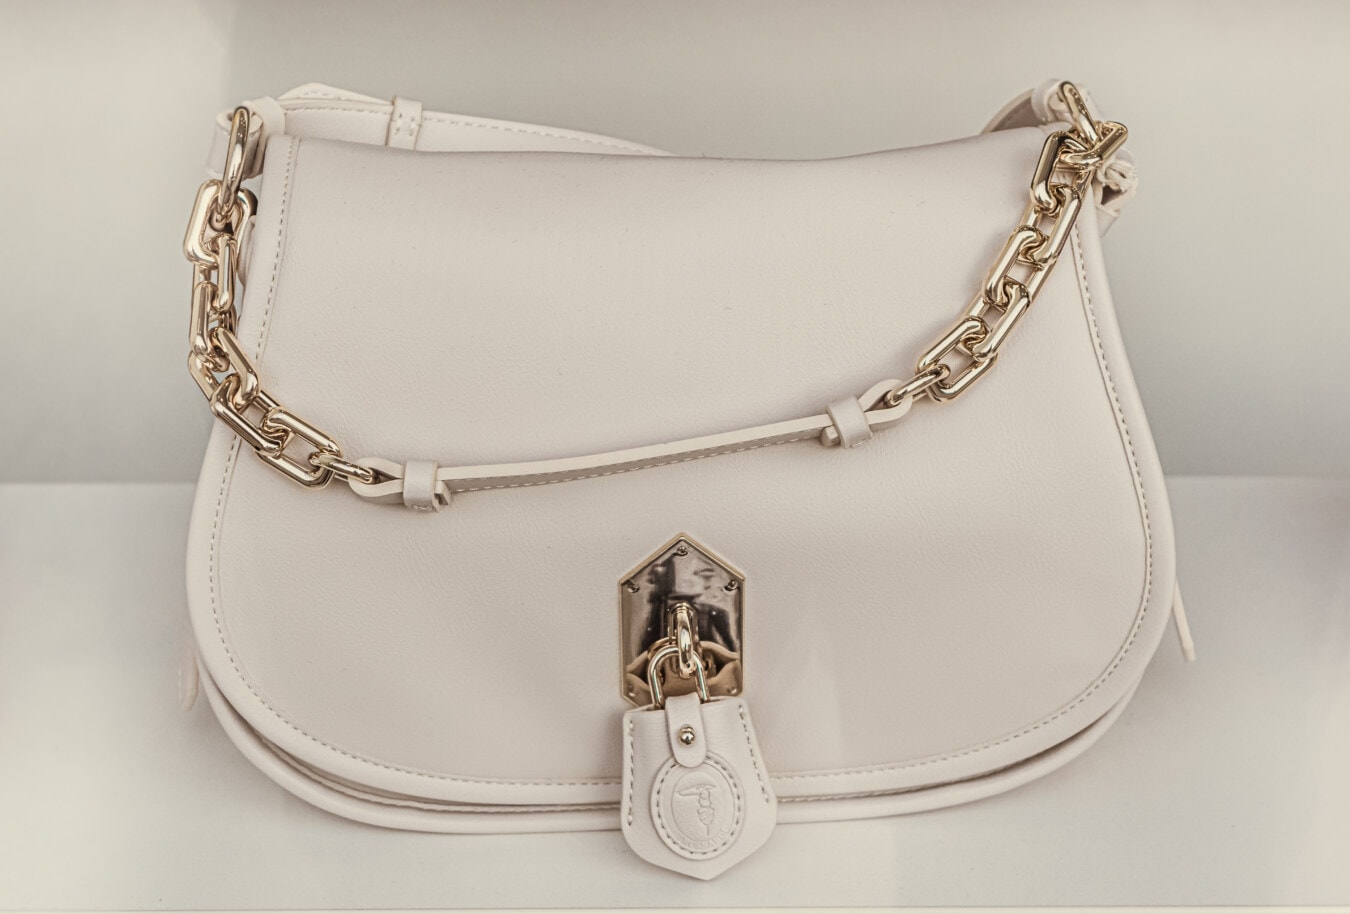 white, handbag, leather, golden glow, chain, padlock, expensive, luxury, fancy, fashion